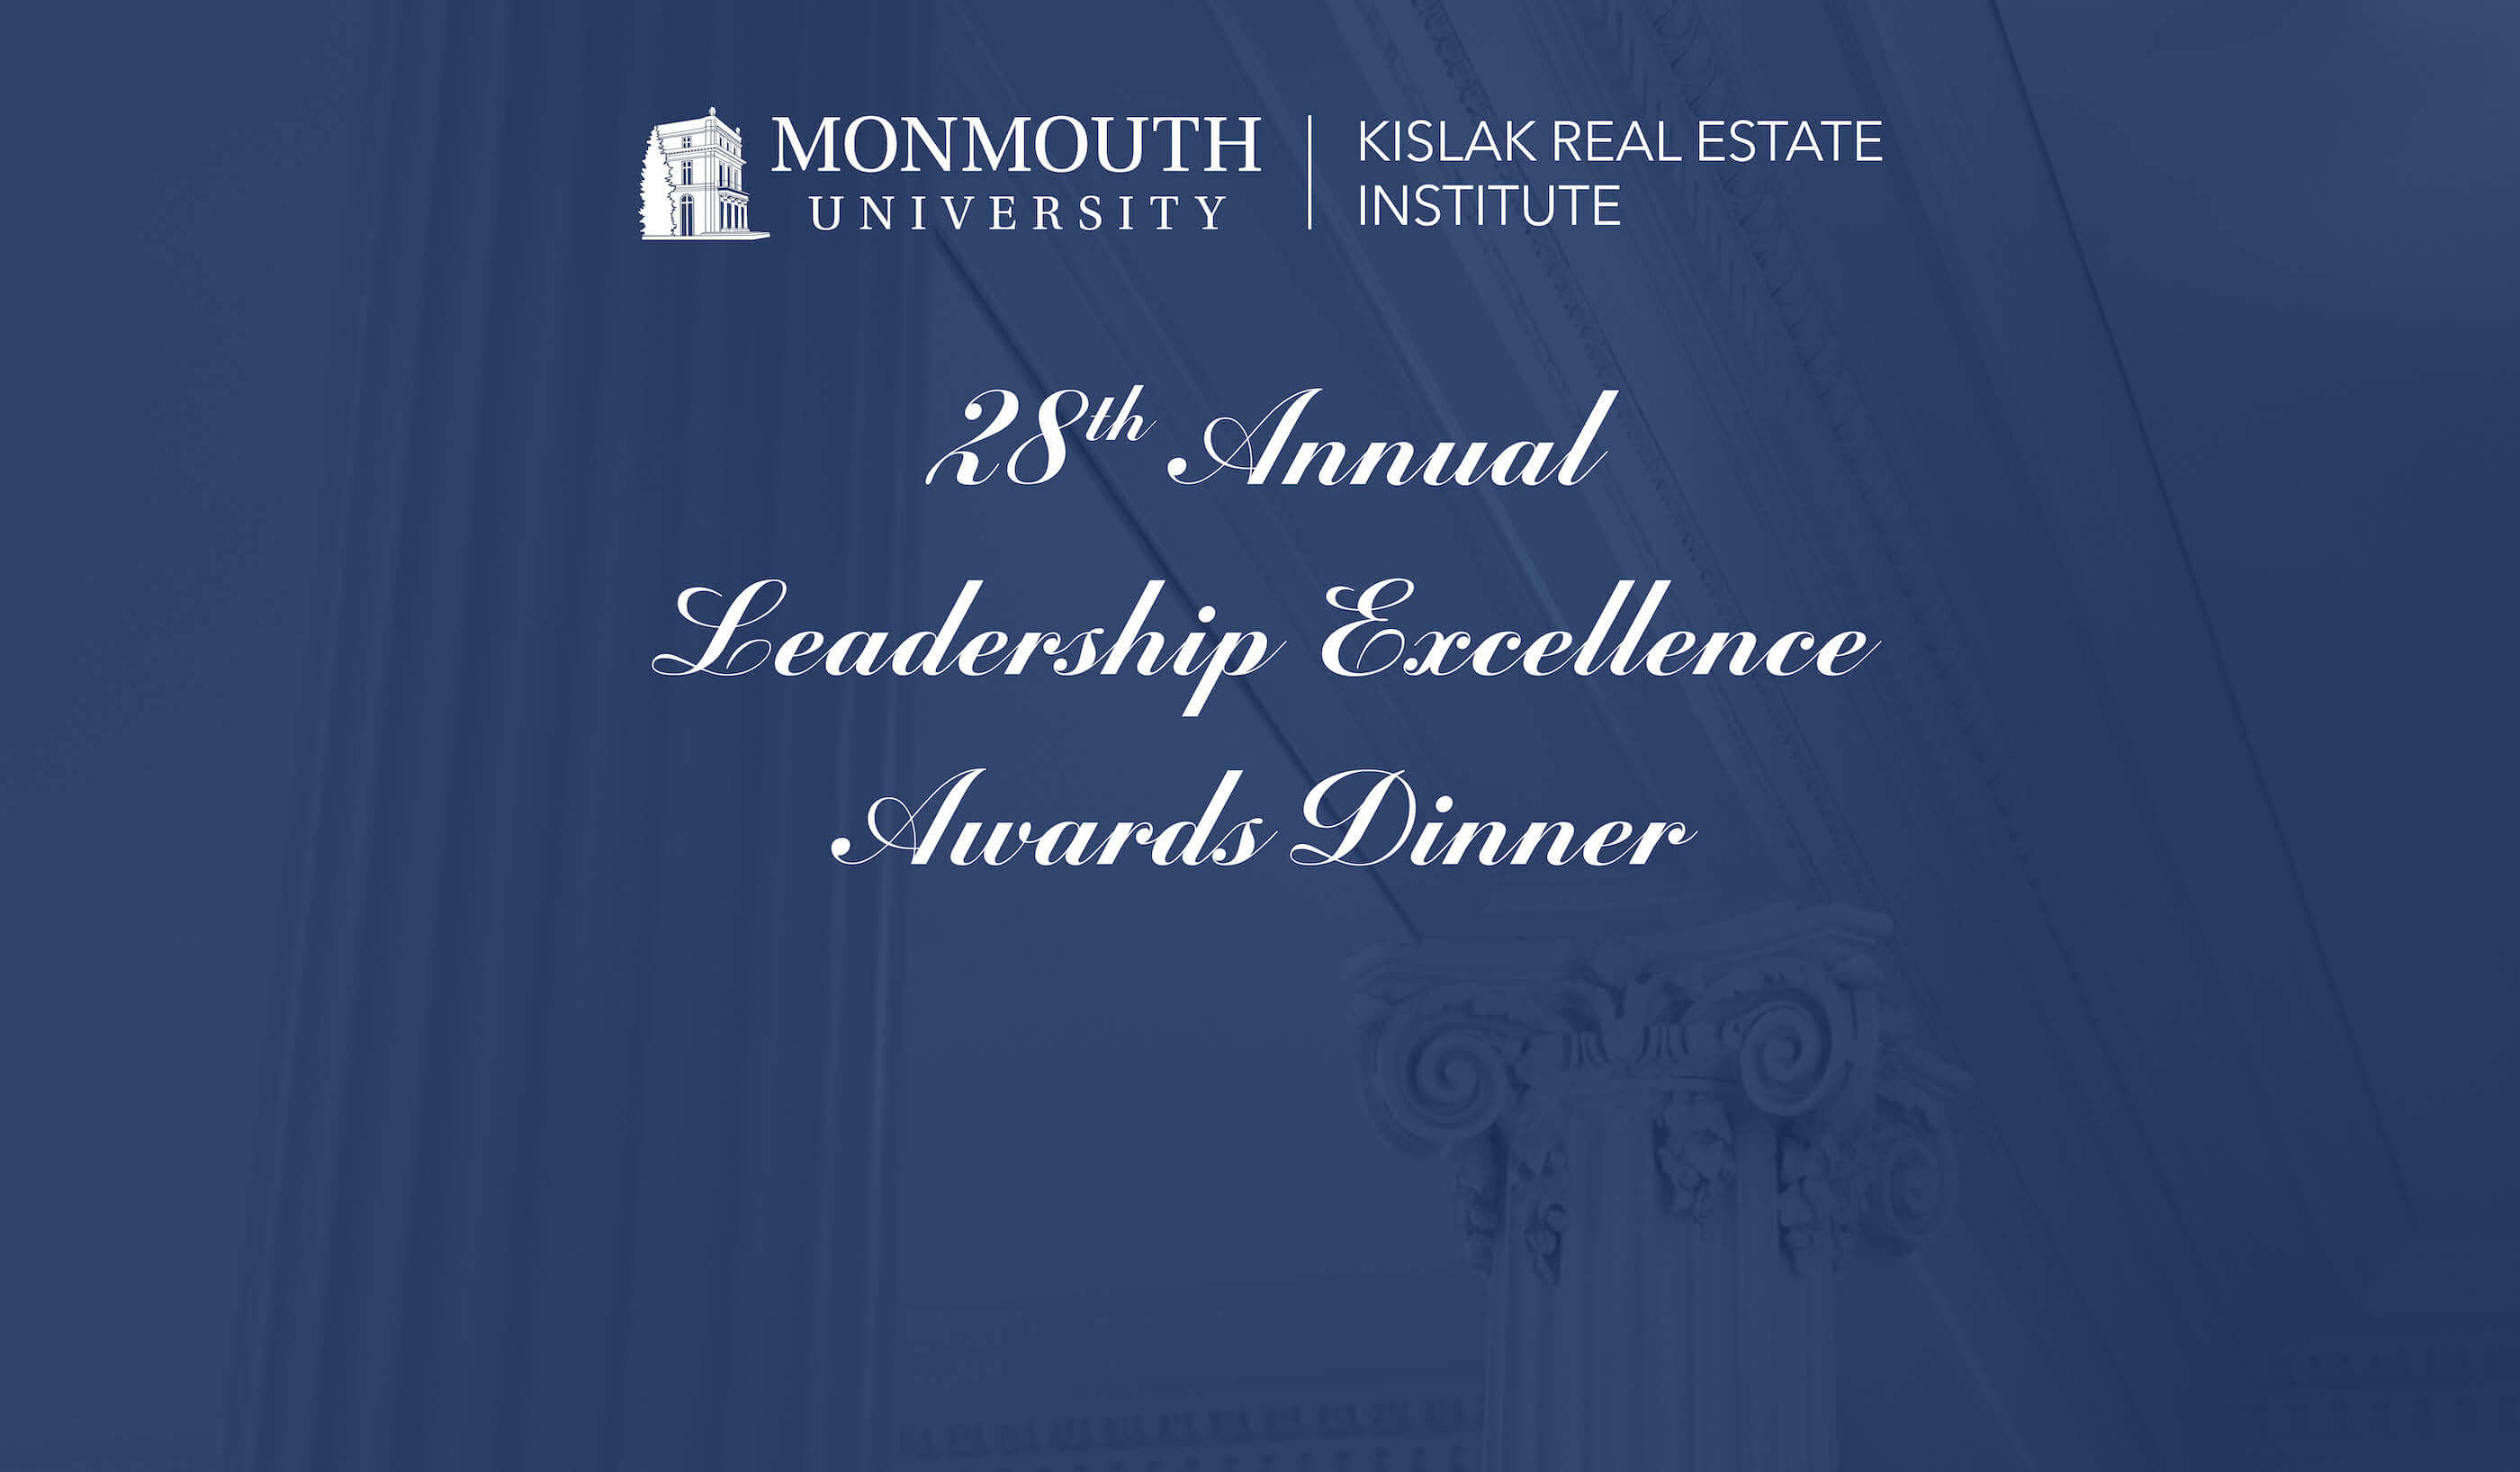 Monmouth University Kislak Real Estate Institute 28th Annual Leadership Excellence Awards Dinner.